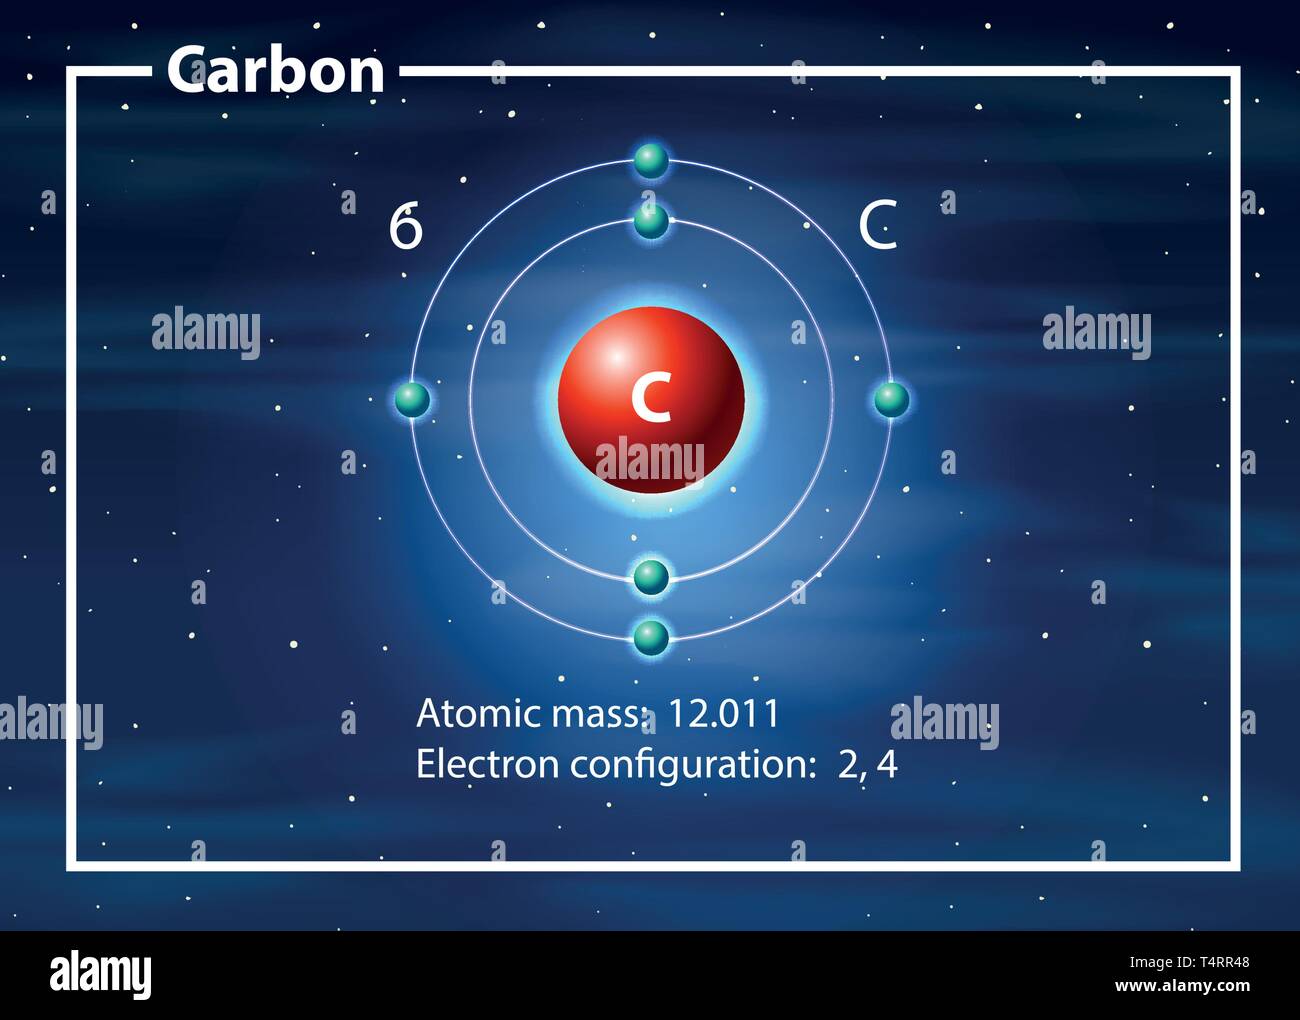 Carbon atom diagram concept illustration Stock Vector